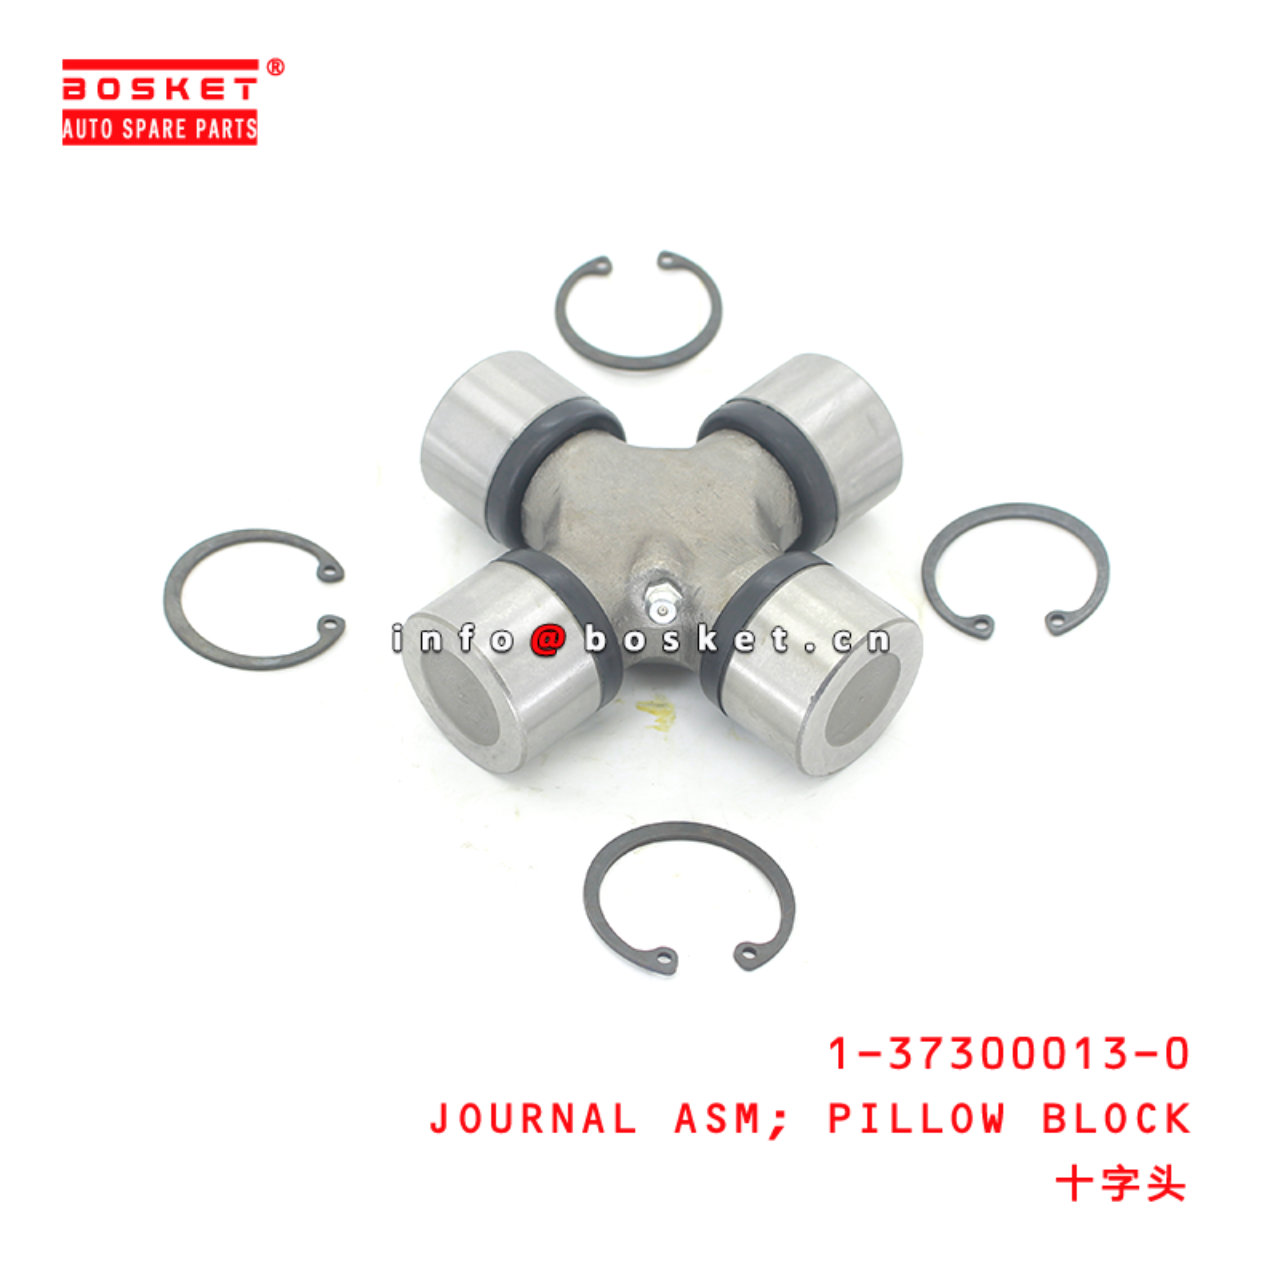 1-37300013-0 Pillow Block Journal Assembly suitable for ISUZU 1373000130